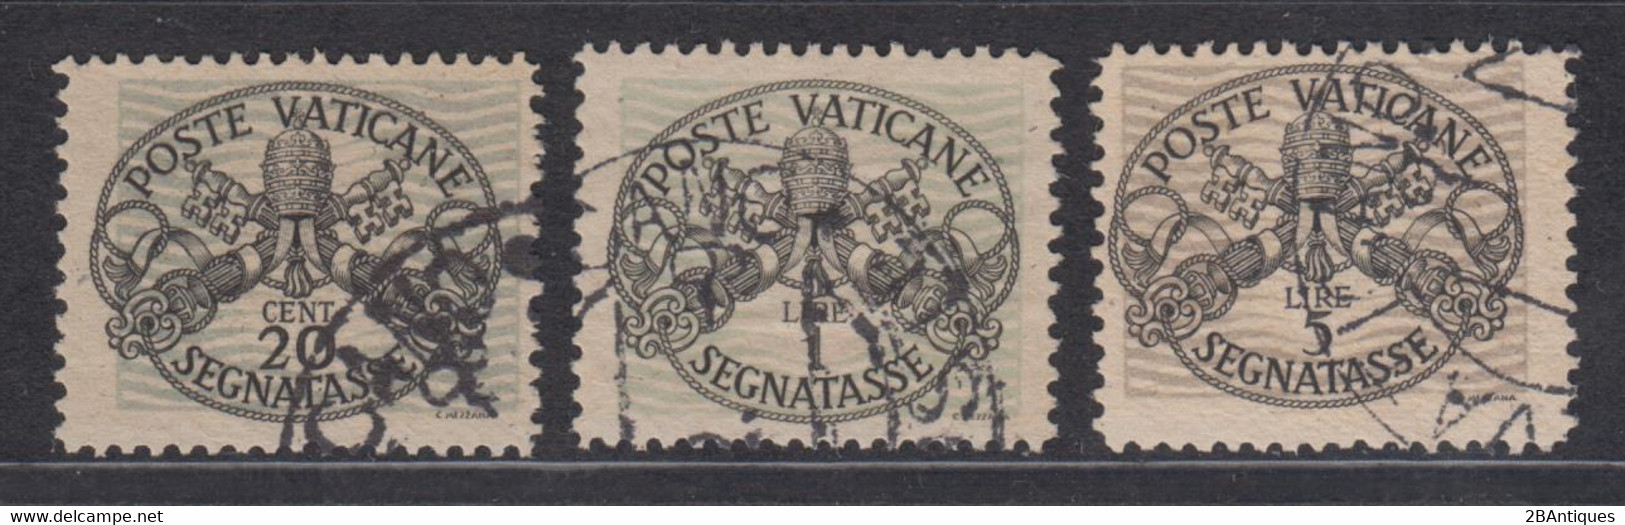 VATICANE 1931 - Postage Due Type II Thick Lines, Grey Paper RARE! - Segnatasse